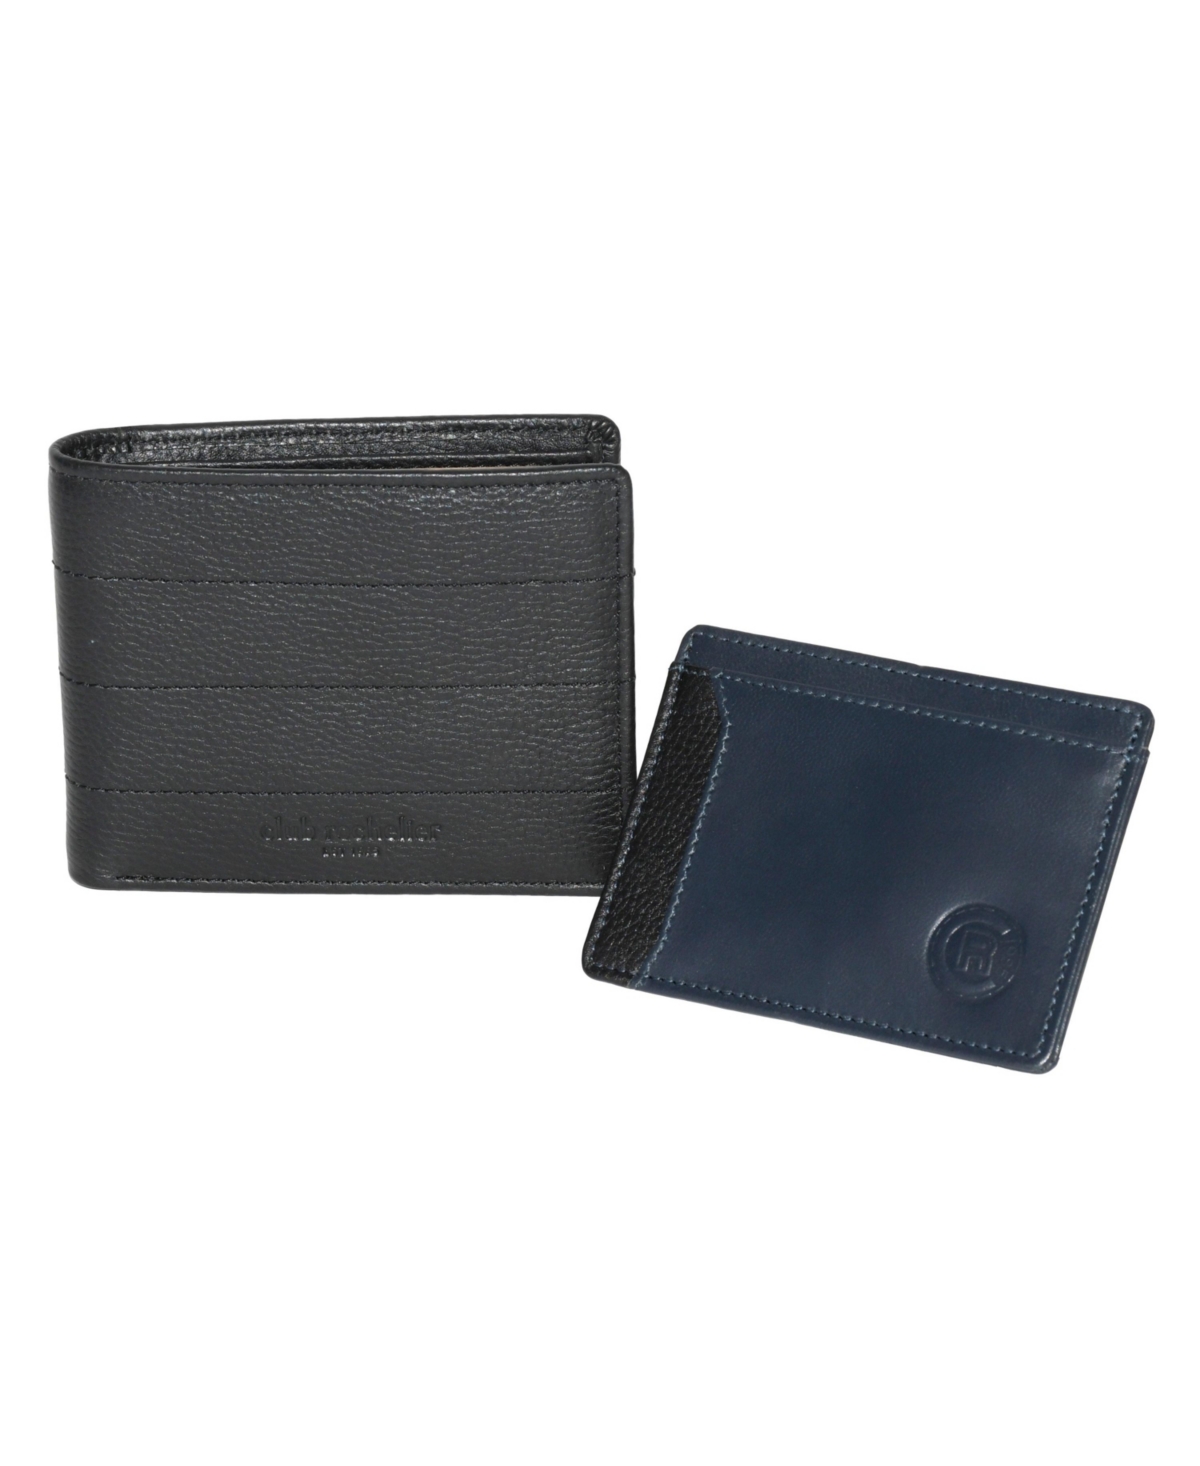 Men's Billfold Wallet with Removable Card Holder - Black/navy